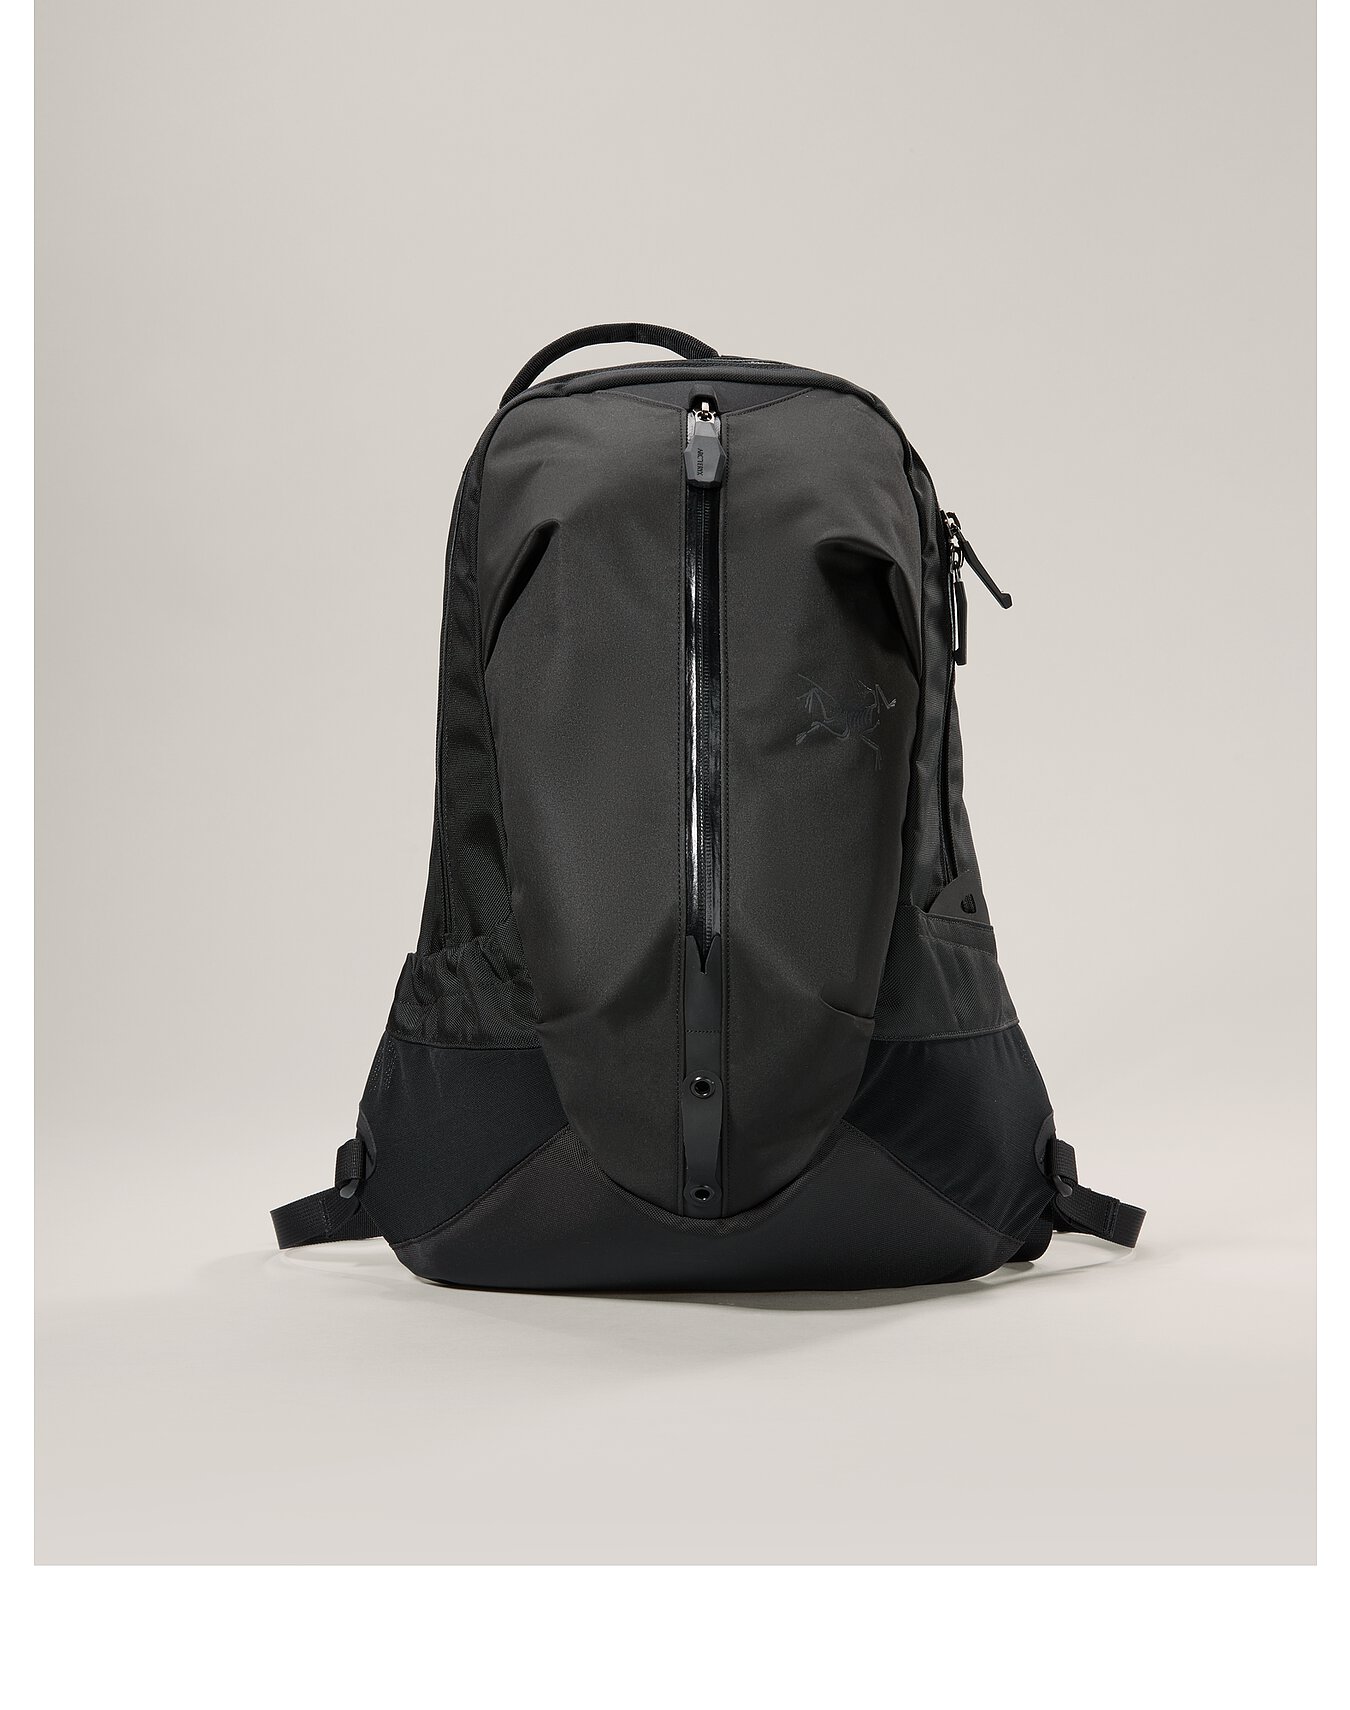 Arro 16 Backpack | Arc'teryx